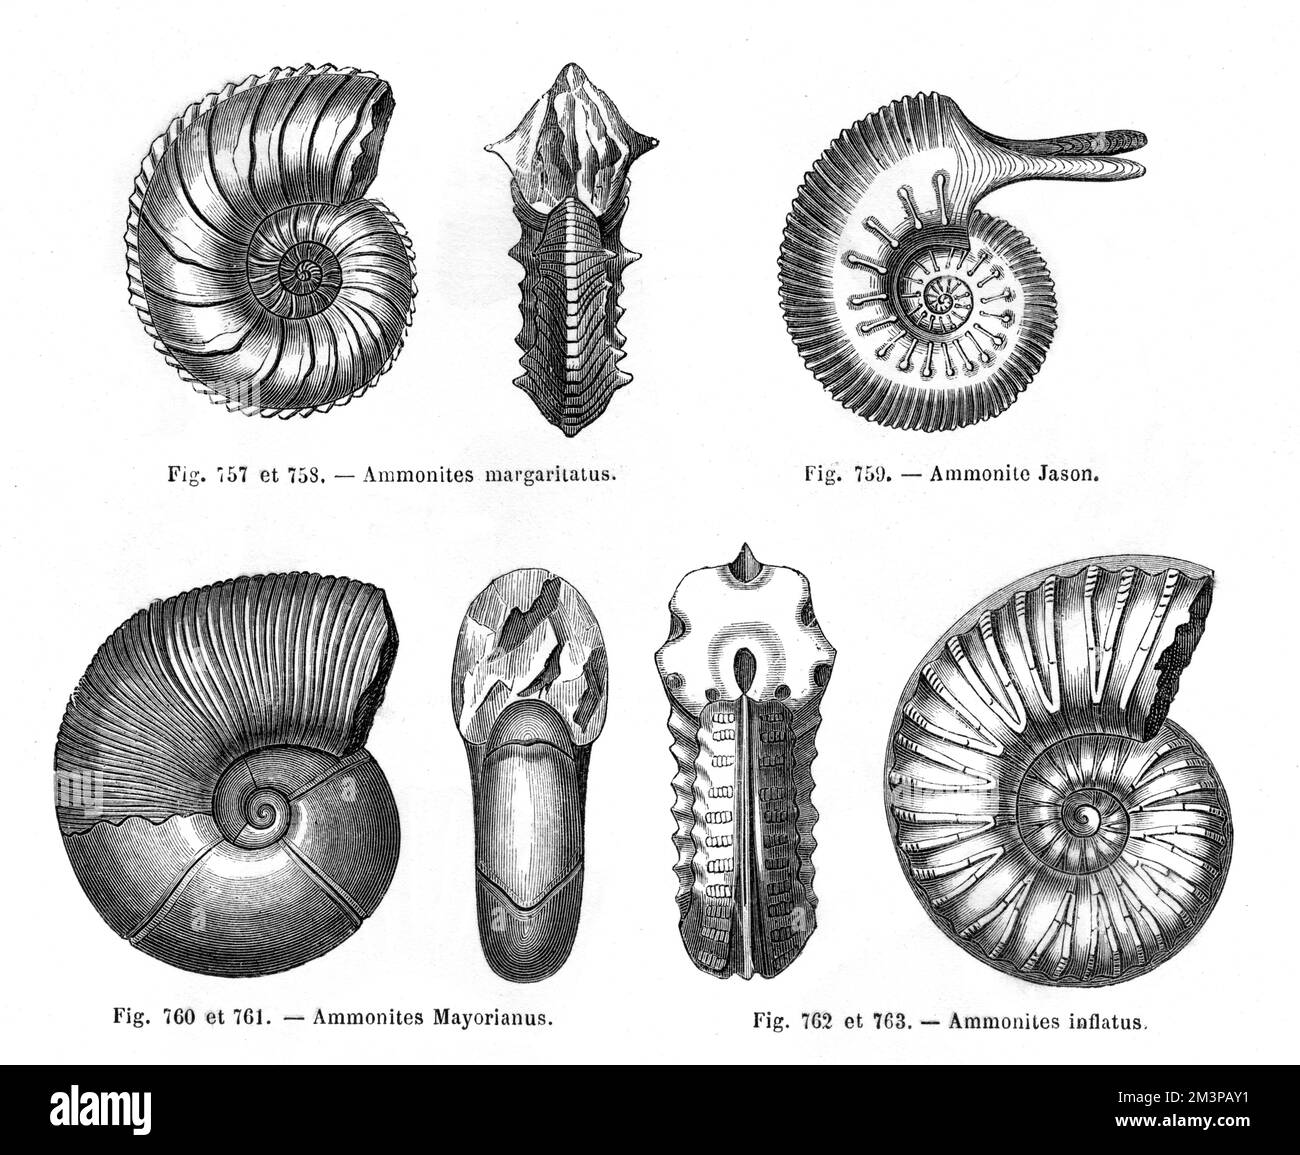 Vier Arten von Ammonitoren: Ammonites margaritanus, Ammonit Jason, Ammonites mayorianus und Ammonites inflatus. Stockfoto